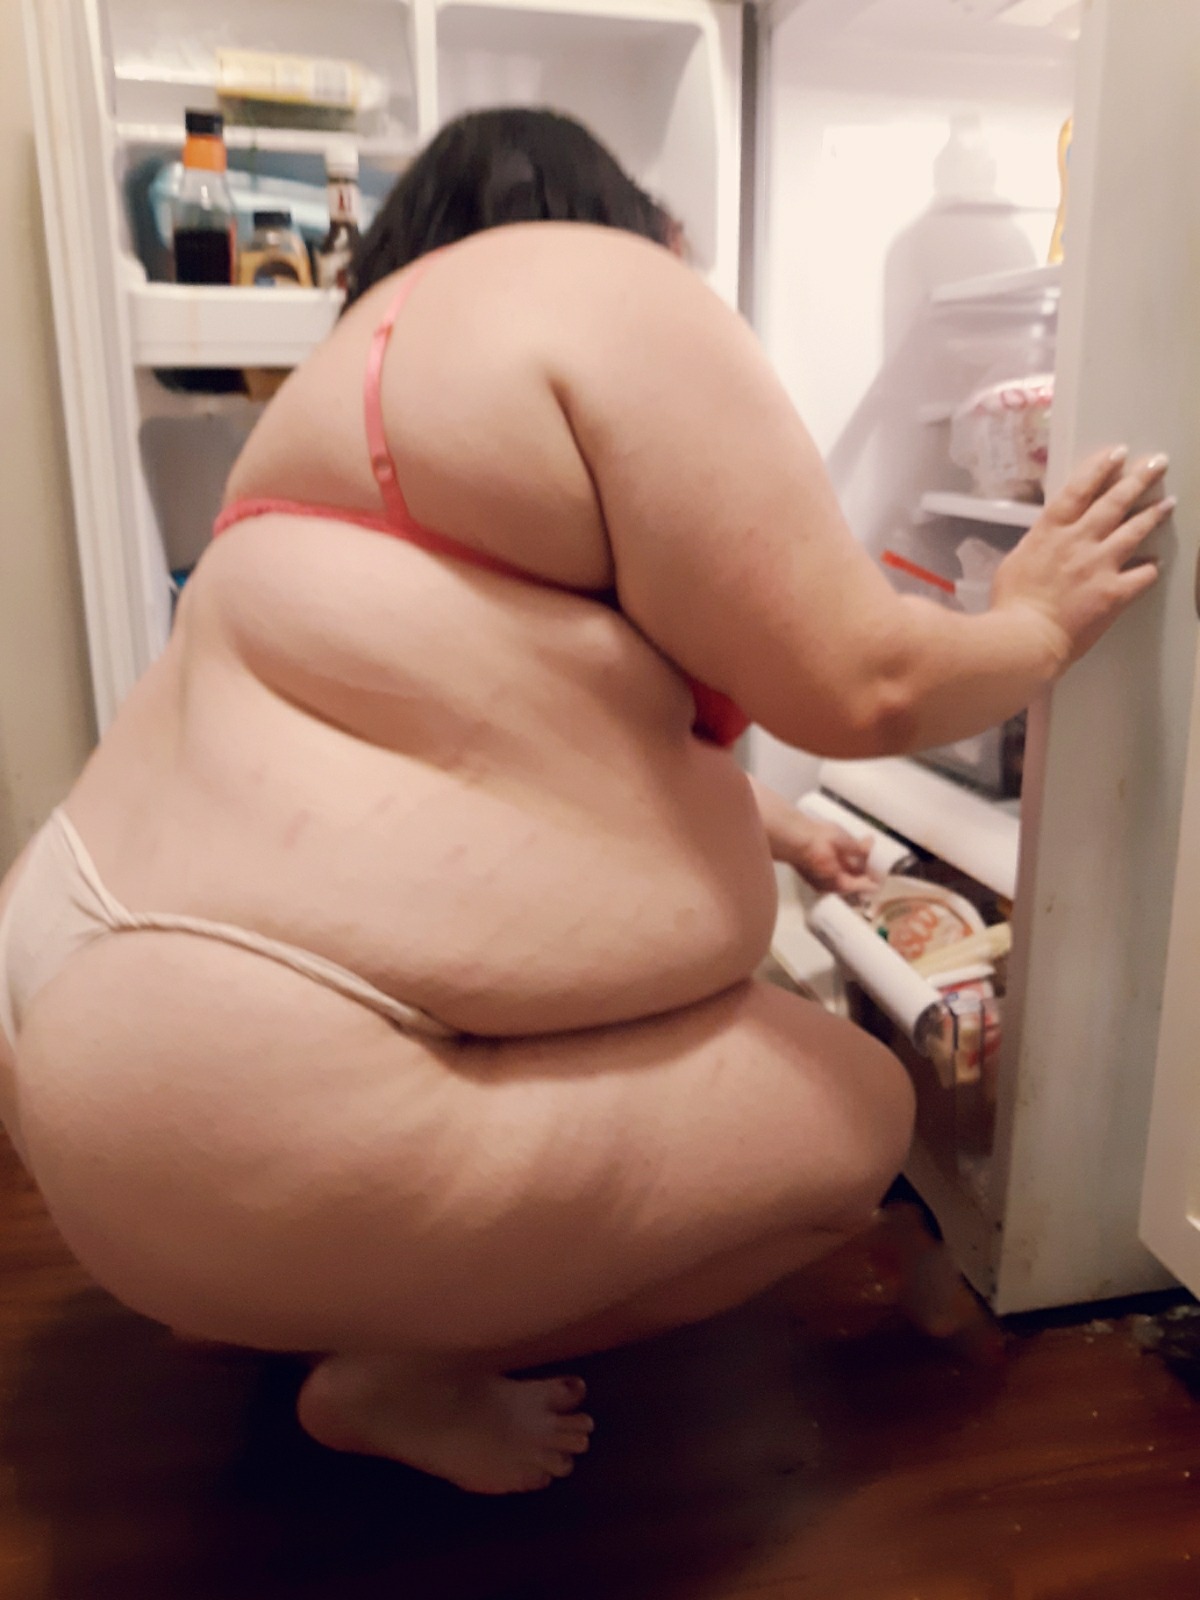 gainer-girlfriend-deactivated20:Wild piggy CAUGHT! in her habitat!#gainer #feedee #feeder #bbw #feedist #bigbelly #bigboobs #bigbutt #bodypositivity #sexpositive #thick #thickgirl #fat #fatgirl #chubbygirl #chubby #plussize #curvy #weightgain #belly #fat